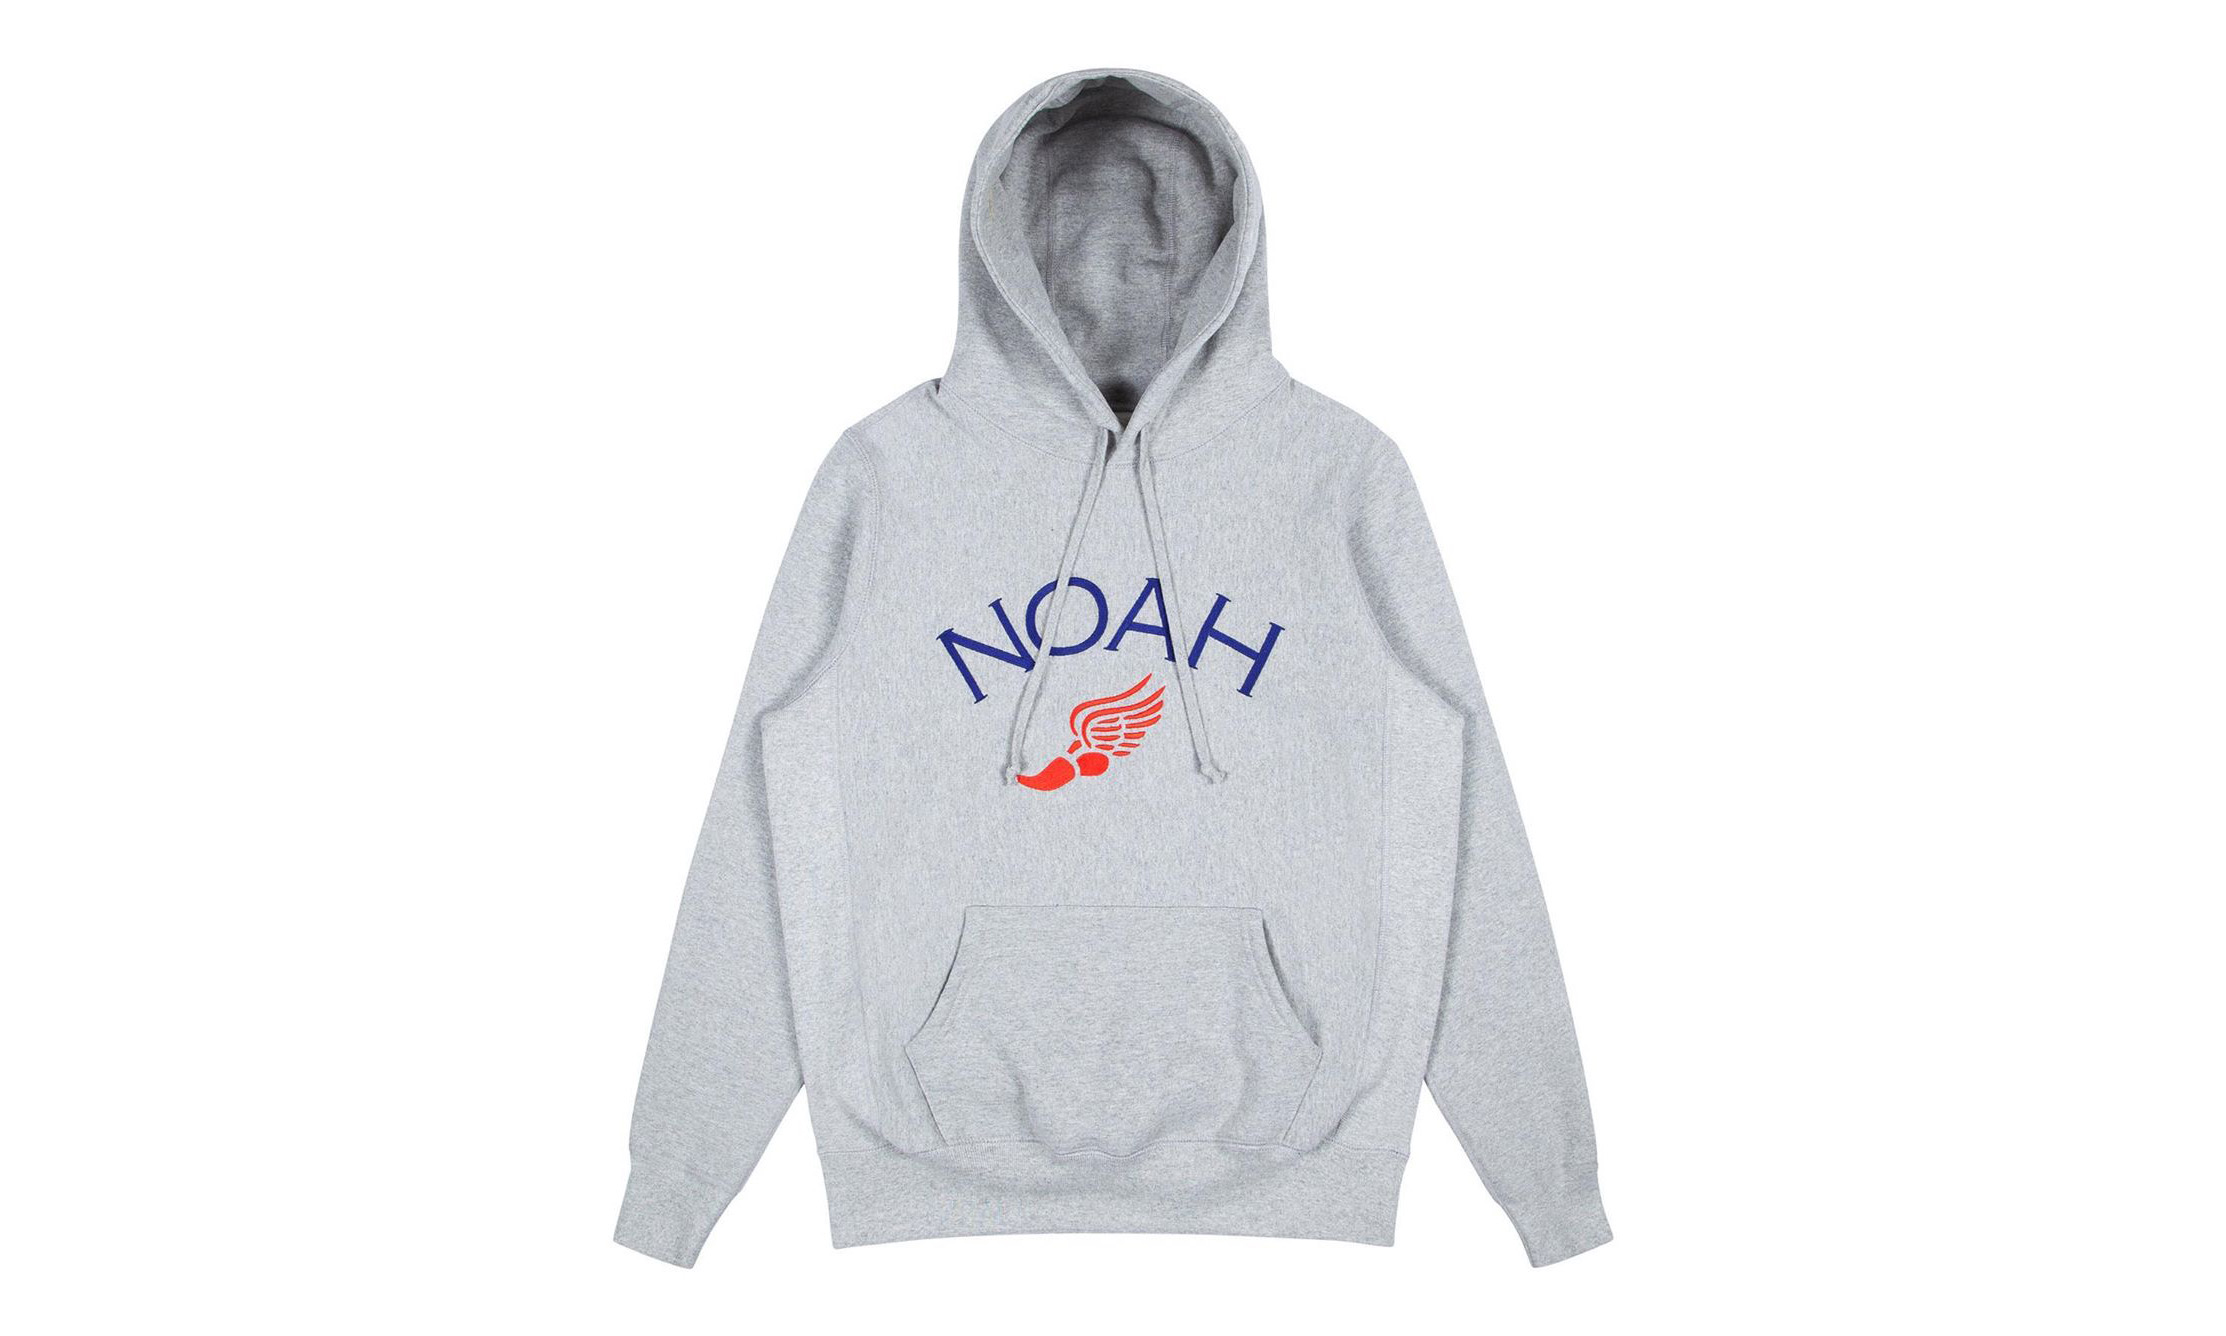 NOAH 经典「Winged Foot」帽衫再次迎来发售